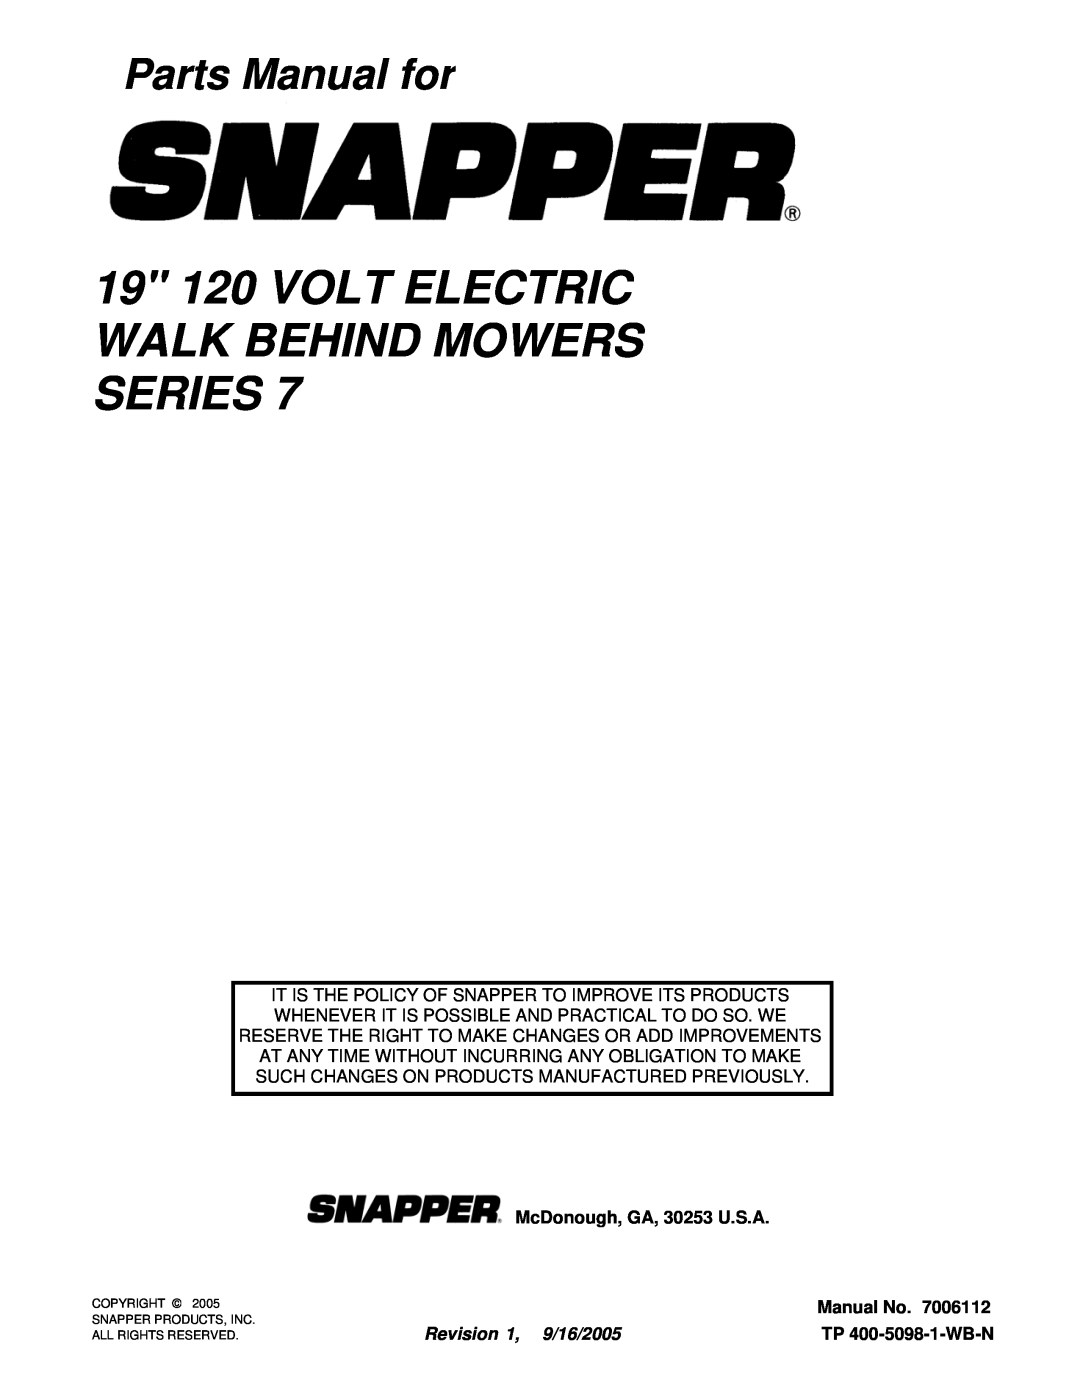 Snapper LWE07B 19 120 VOLT ELECTRIC WALK BEHIND MOWERS SERIES, Parts Manual for, McDonough, GA, 30253 U.S.A, Manual No 